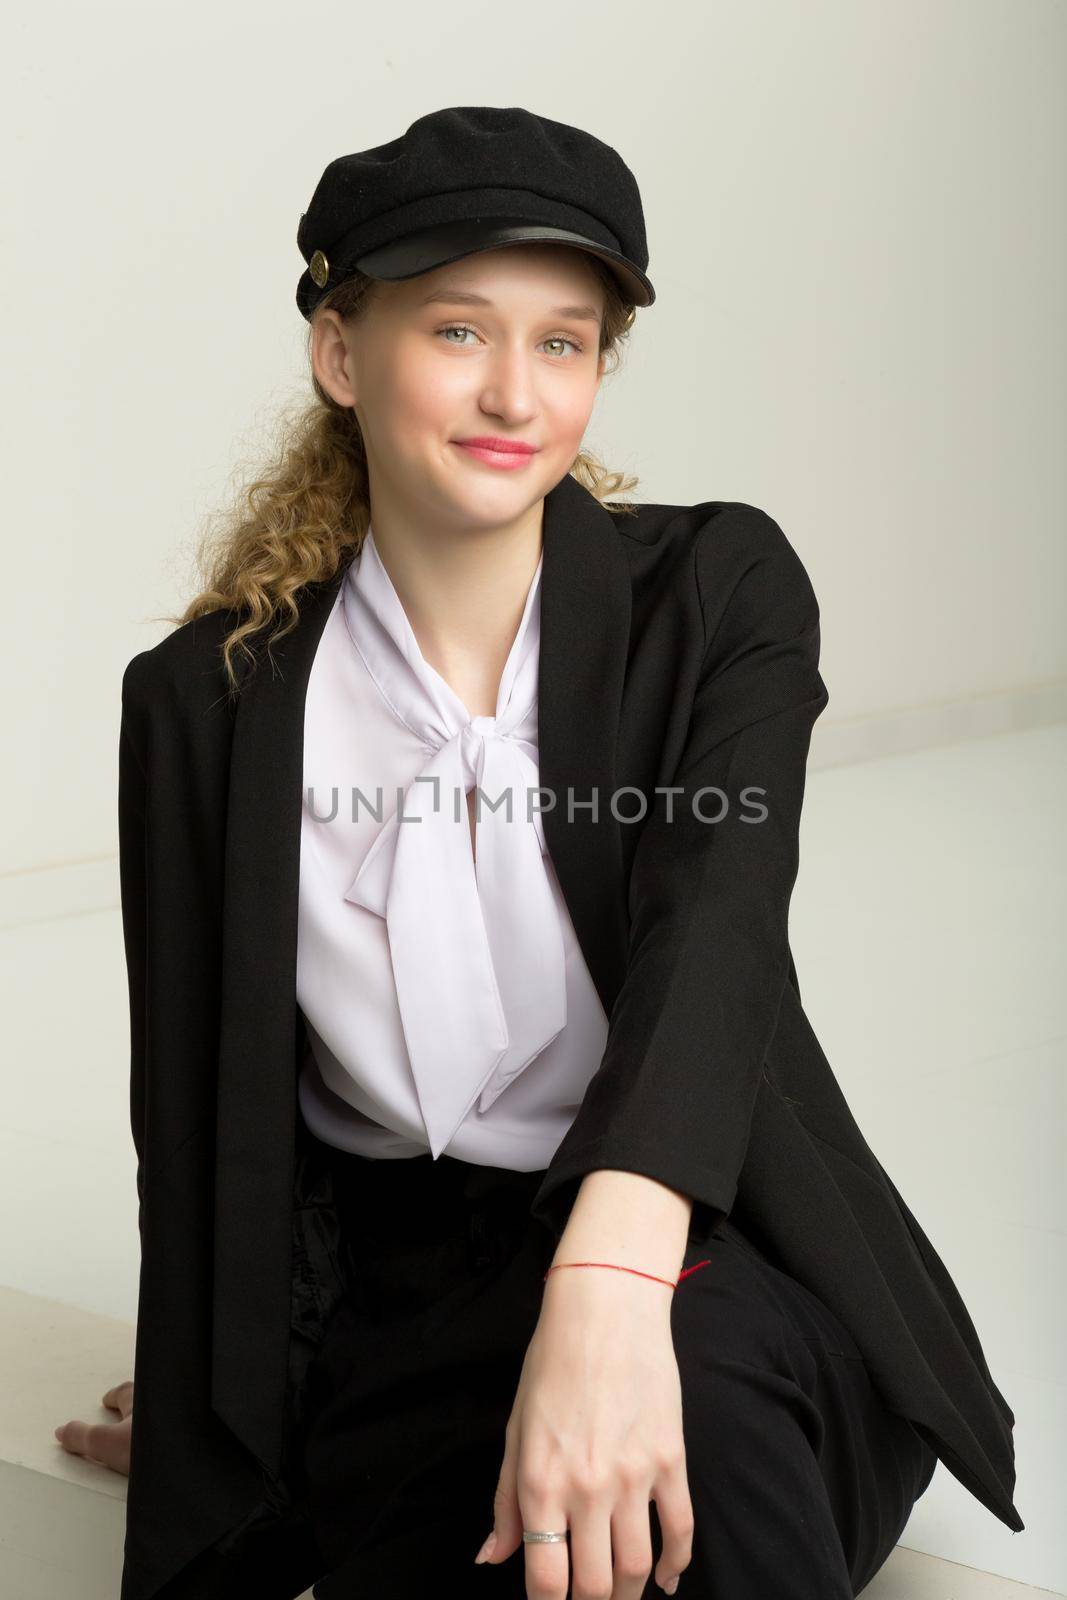 Portrait of cheerful girl in elegant suit and cap by kolesnikov_studio